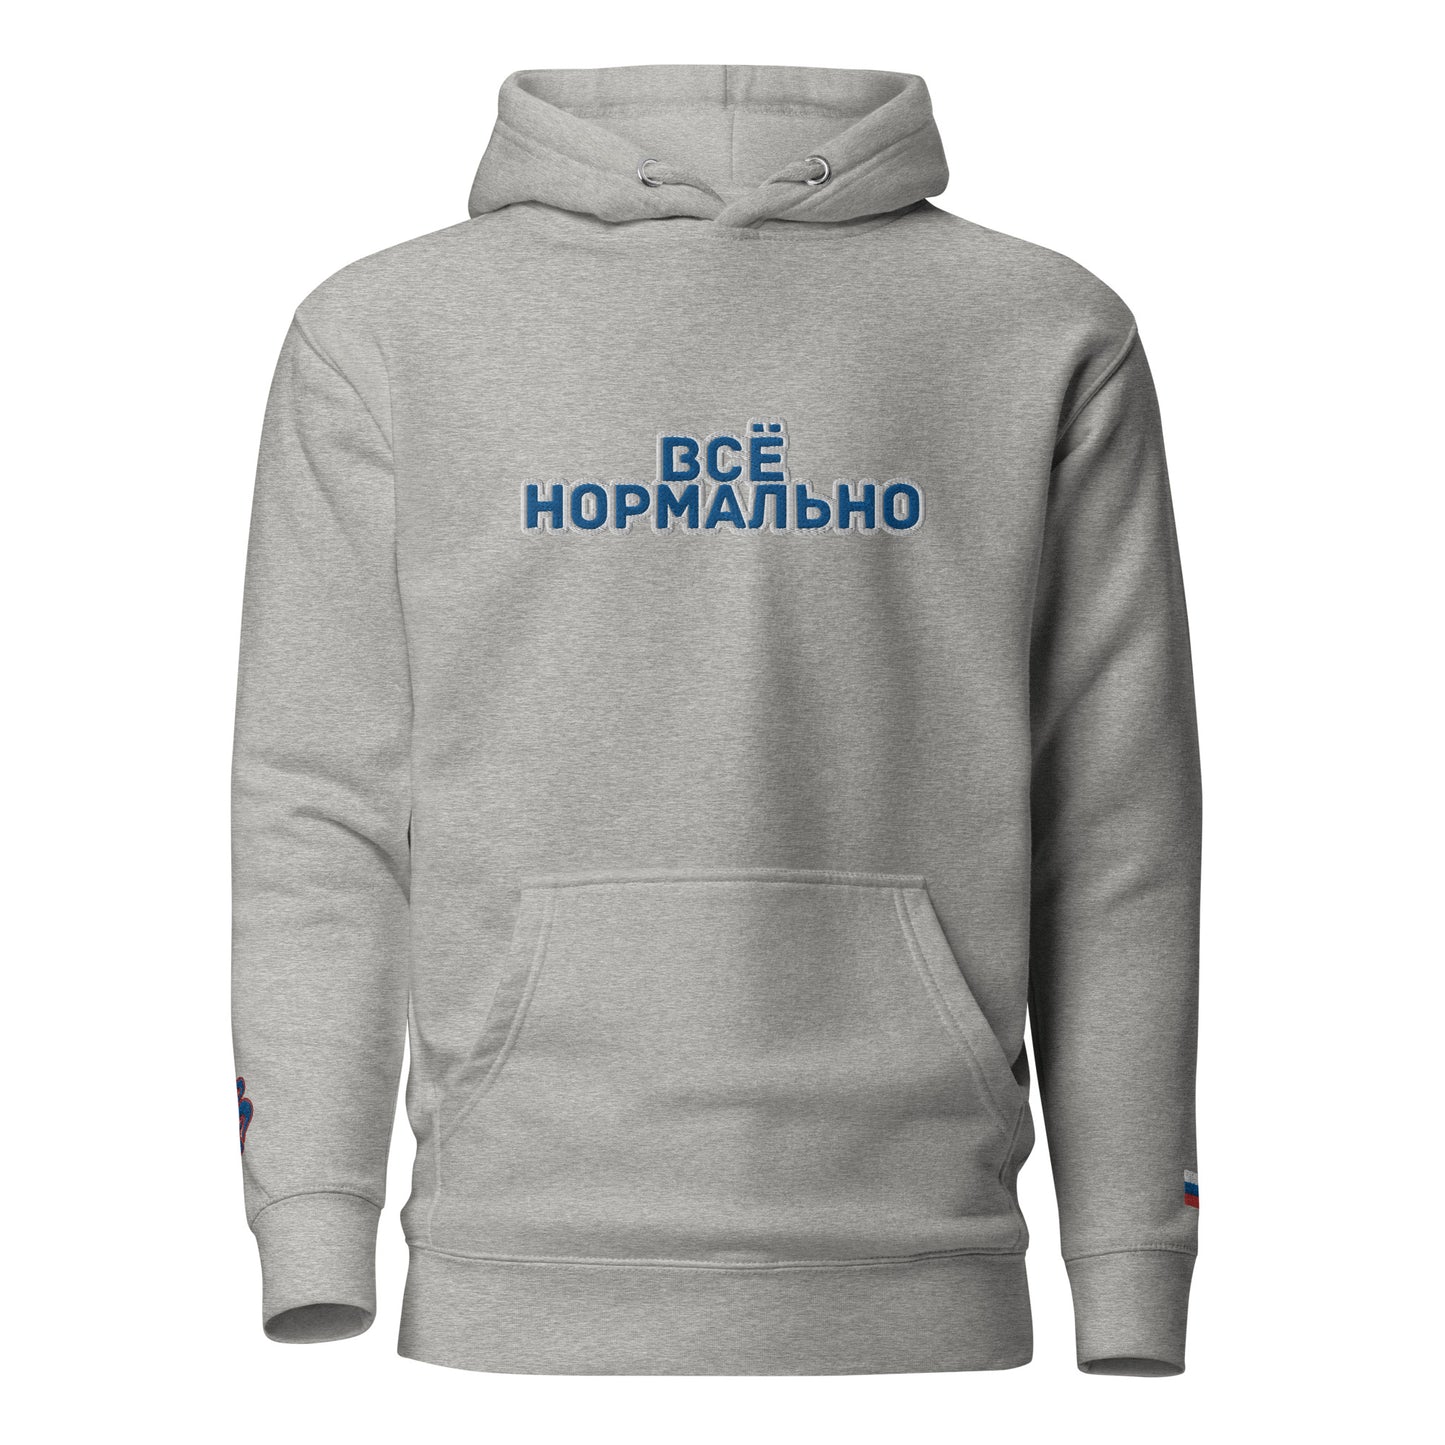 BigSmoke Soprano Clothing: BigSmoke Soprano Worldwide Collection: Всё нормально Unisex Hoodie (Russia Edition)